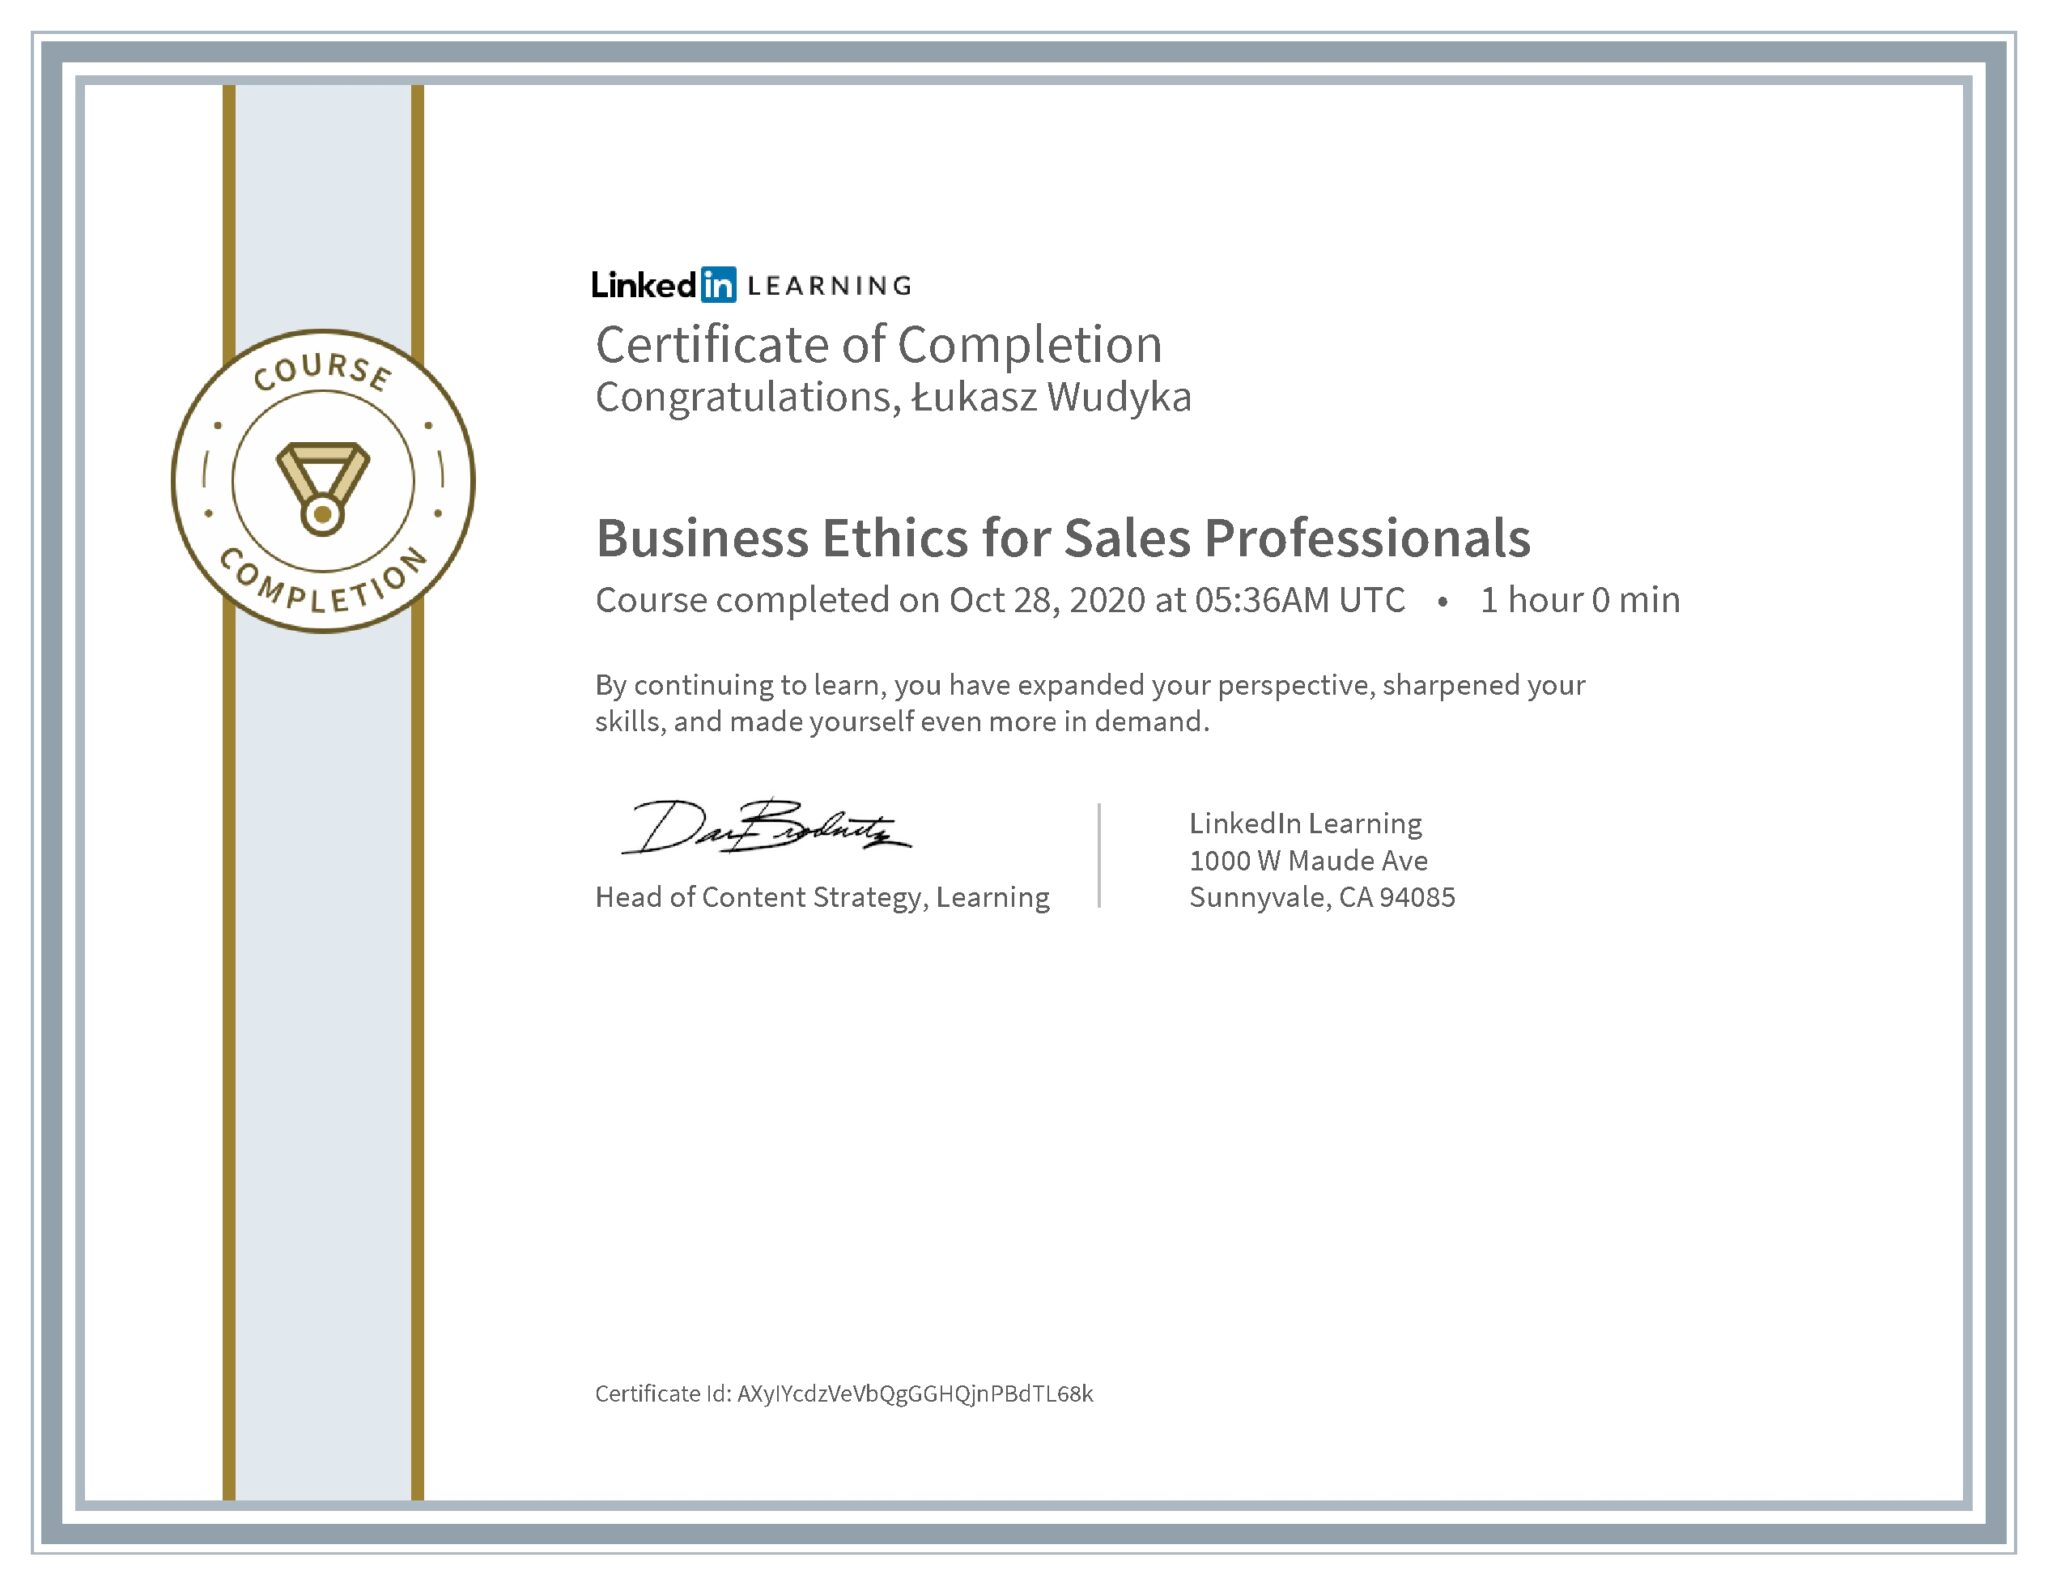 Łukasz Wudyka certyfikat LinkedIn Business Ethics for Sales Professionals